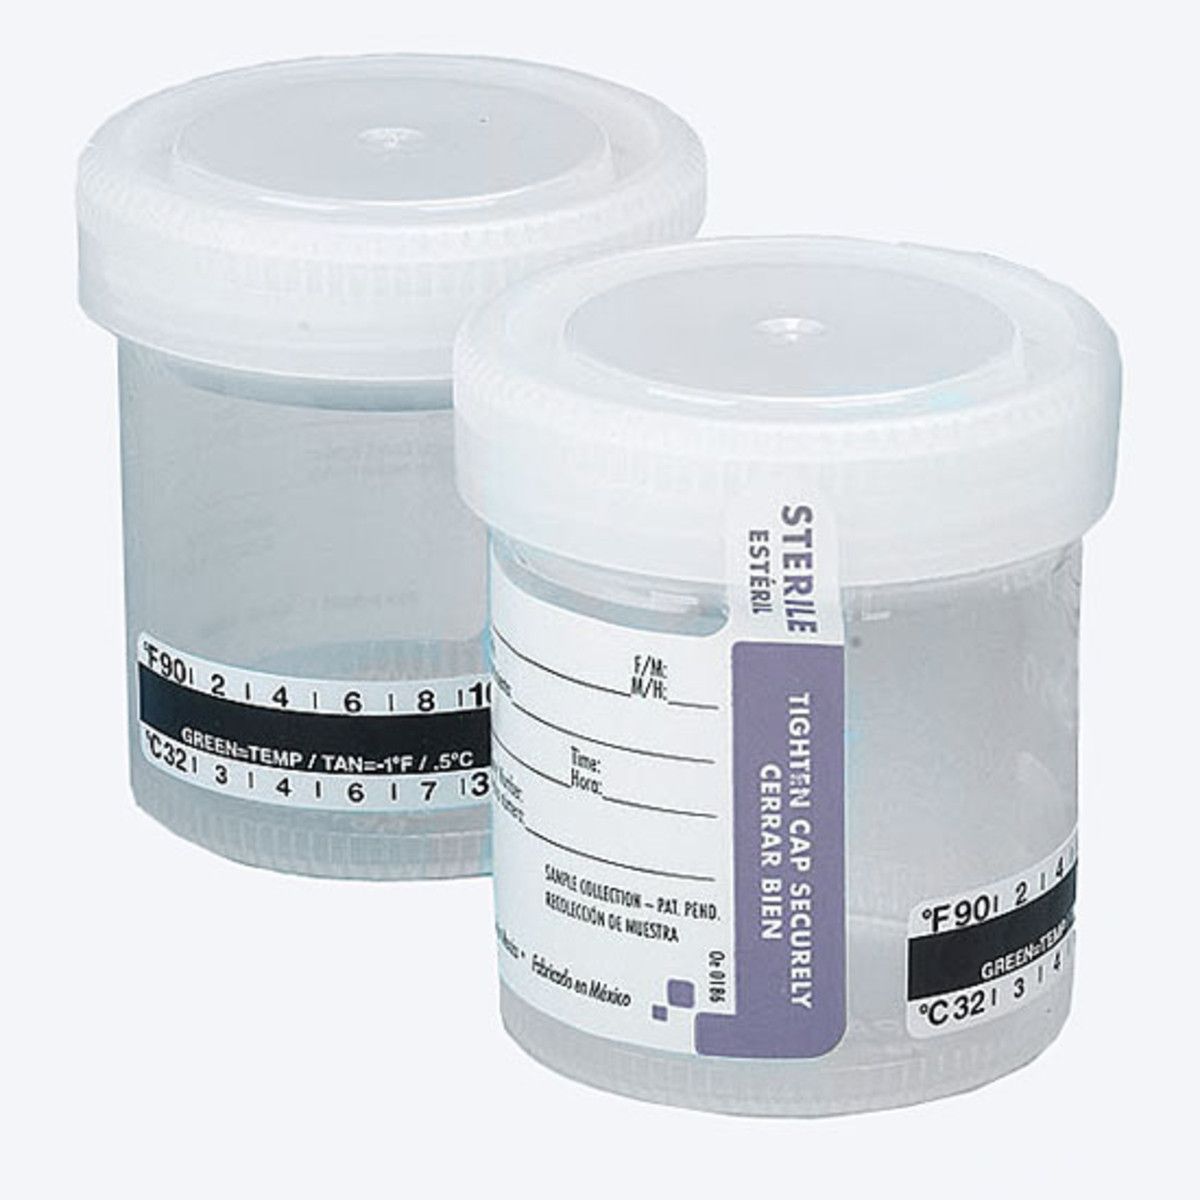 Globe Scientific 6236 Drug Testing Specimen Container with Temperature Strip 57 X 73 mm 90 mL (3 oz.) Screw Cap Patient Information Sterile (Case of 300)